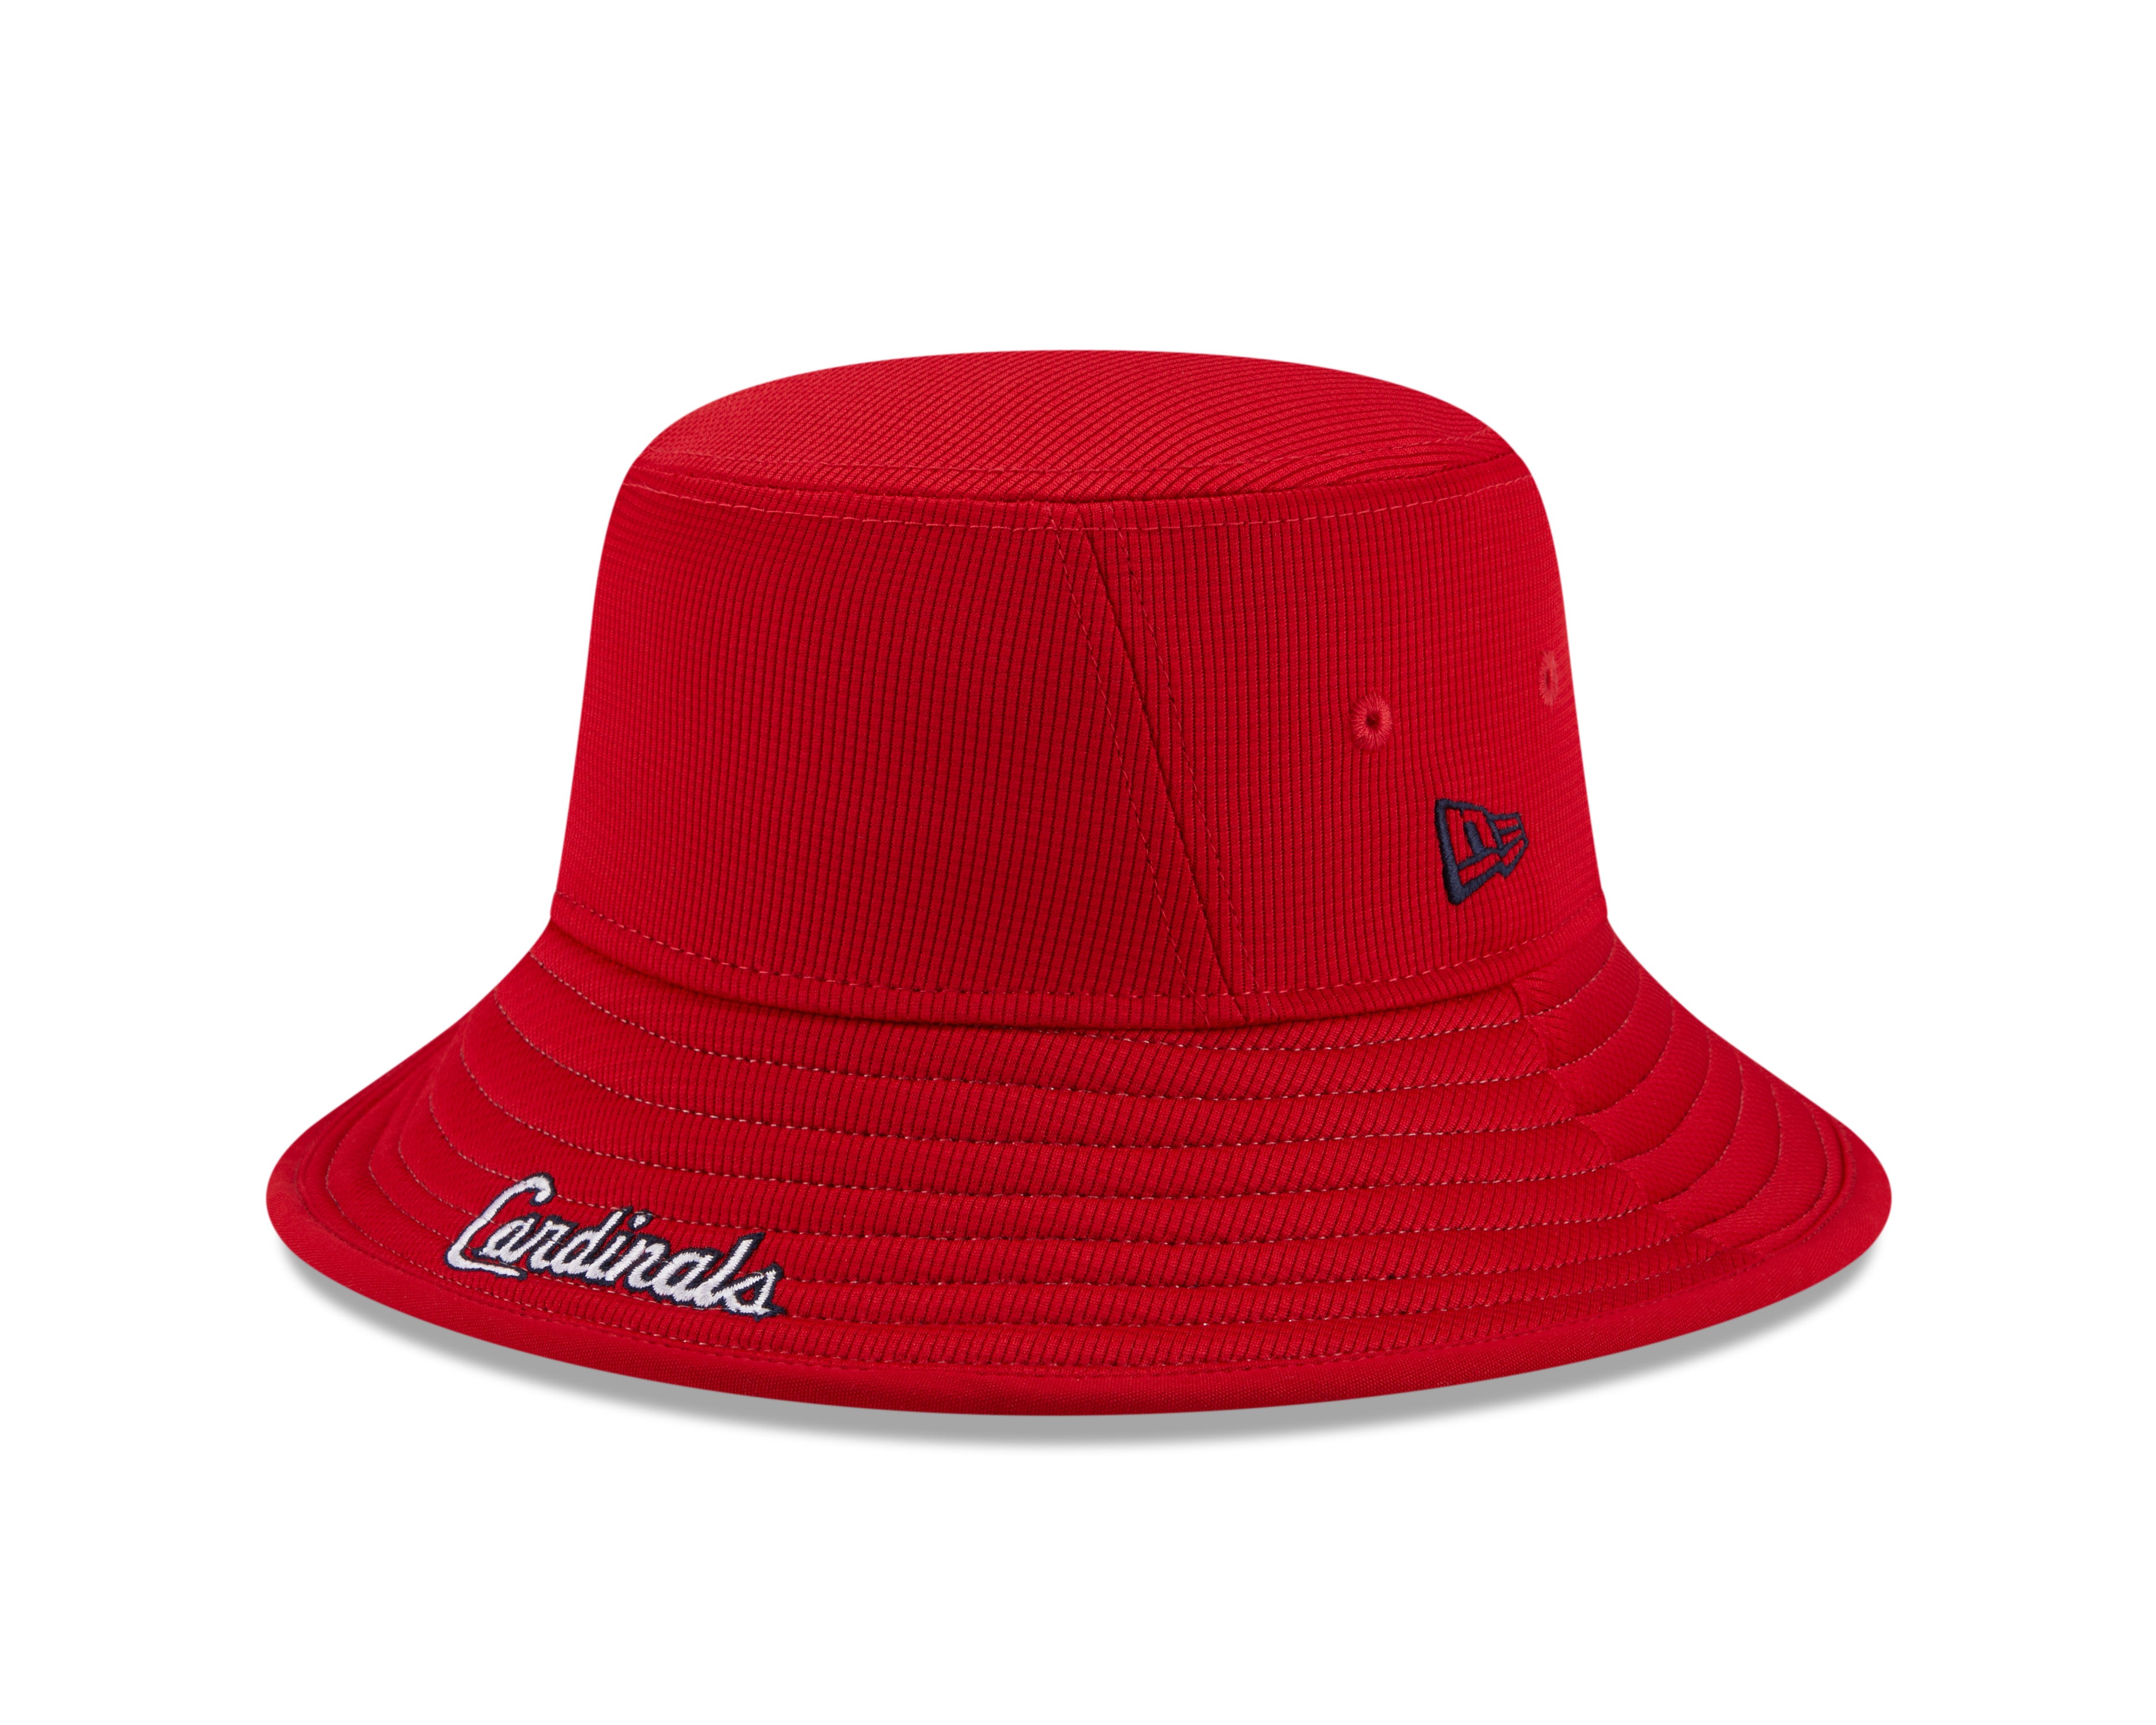 Official St. Louis Cardinals Bucket Hats, Cardinals Safari Hats, Booney Caps